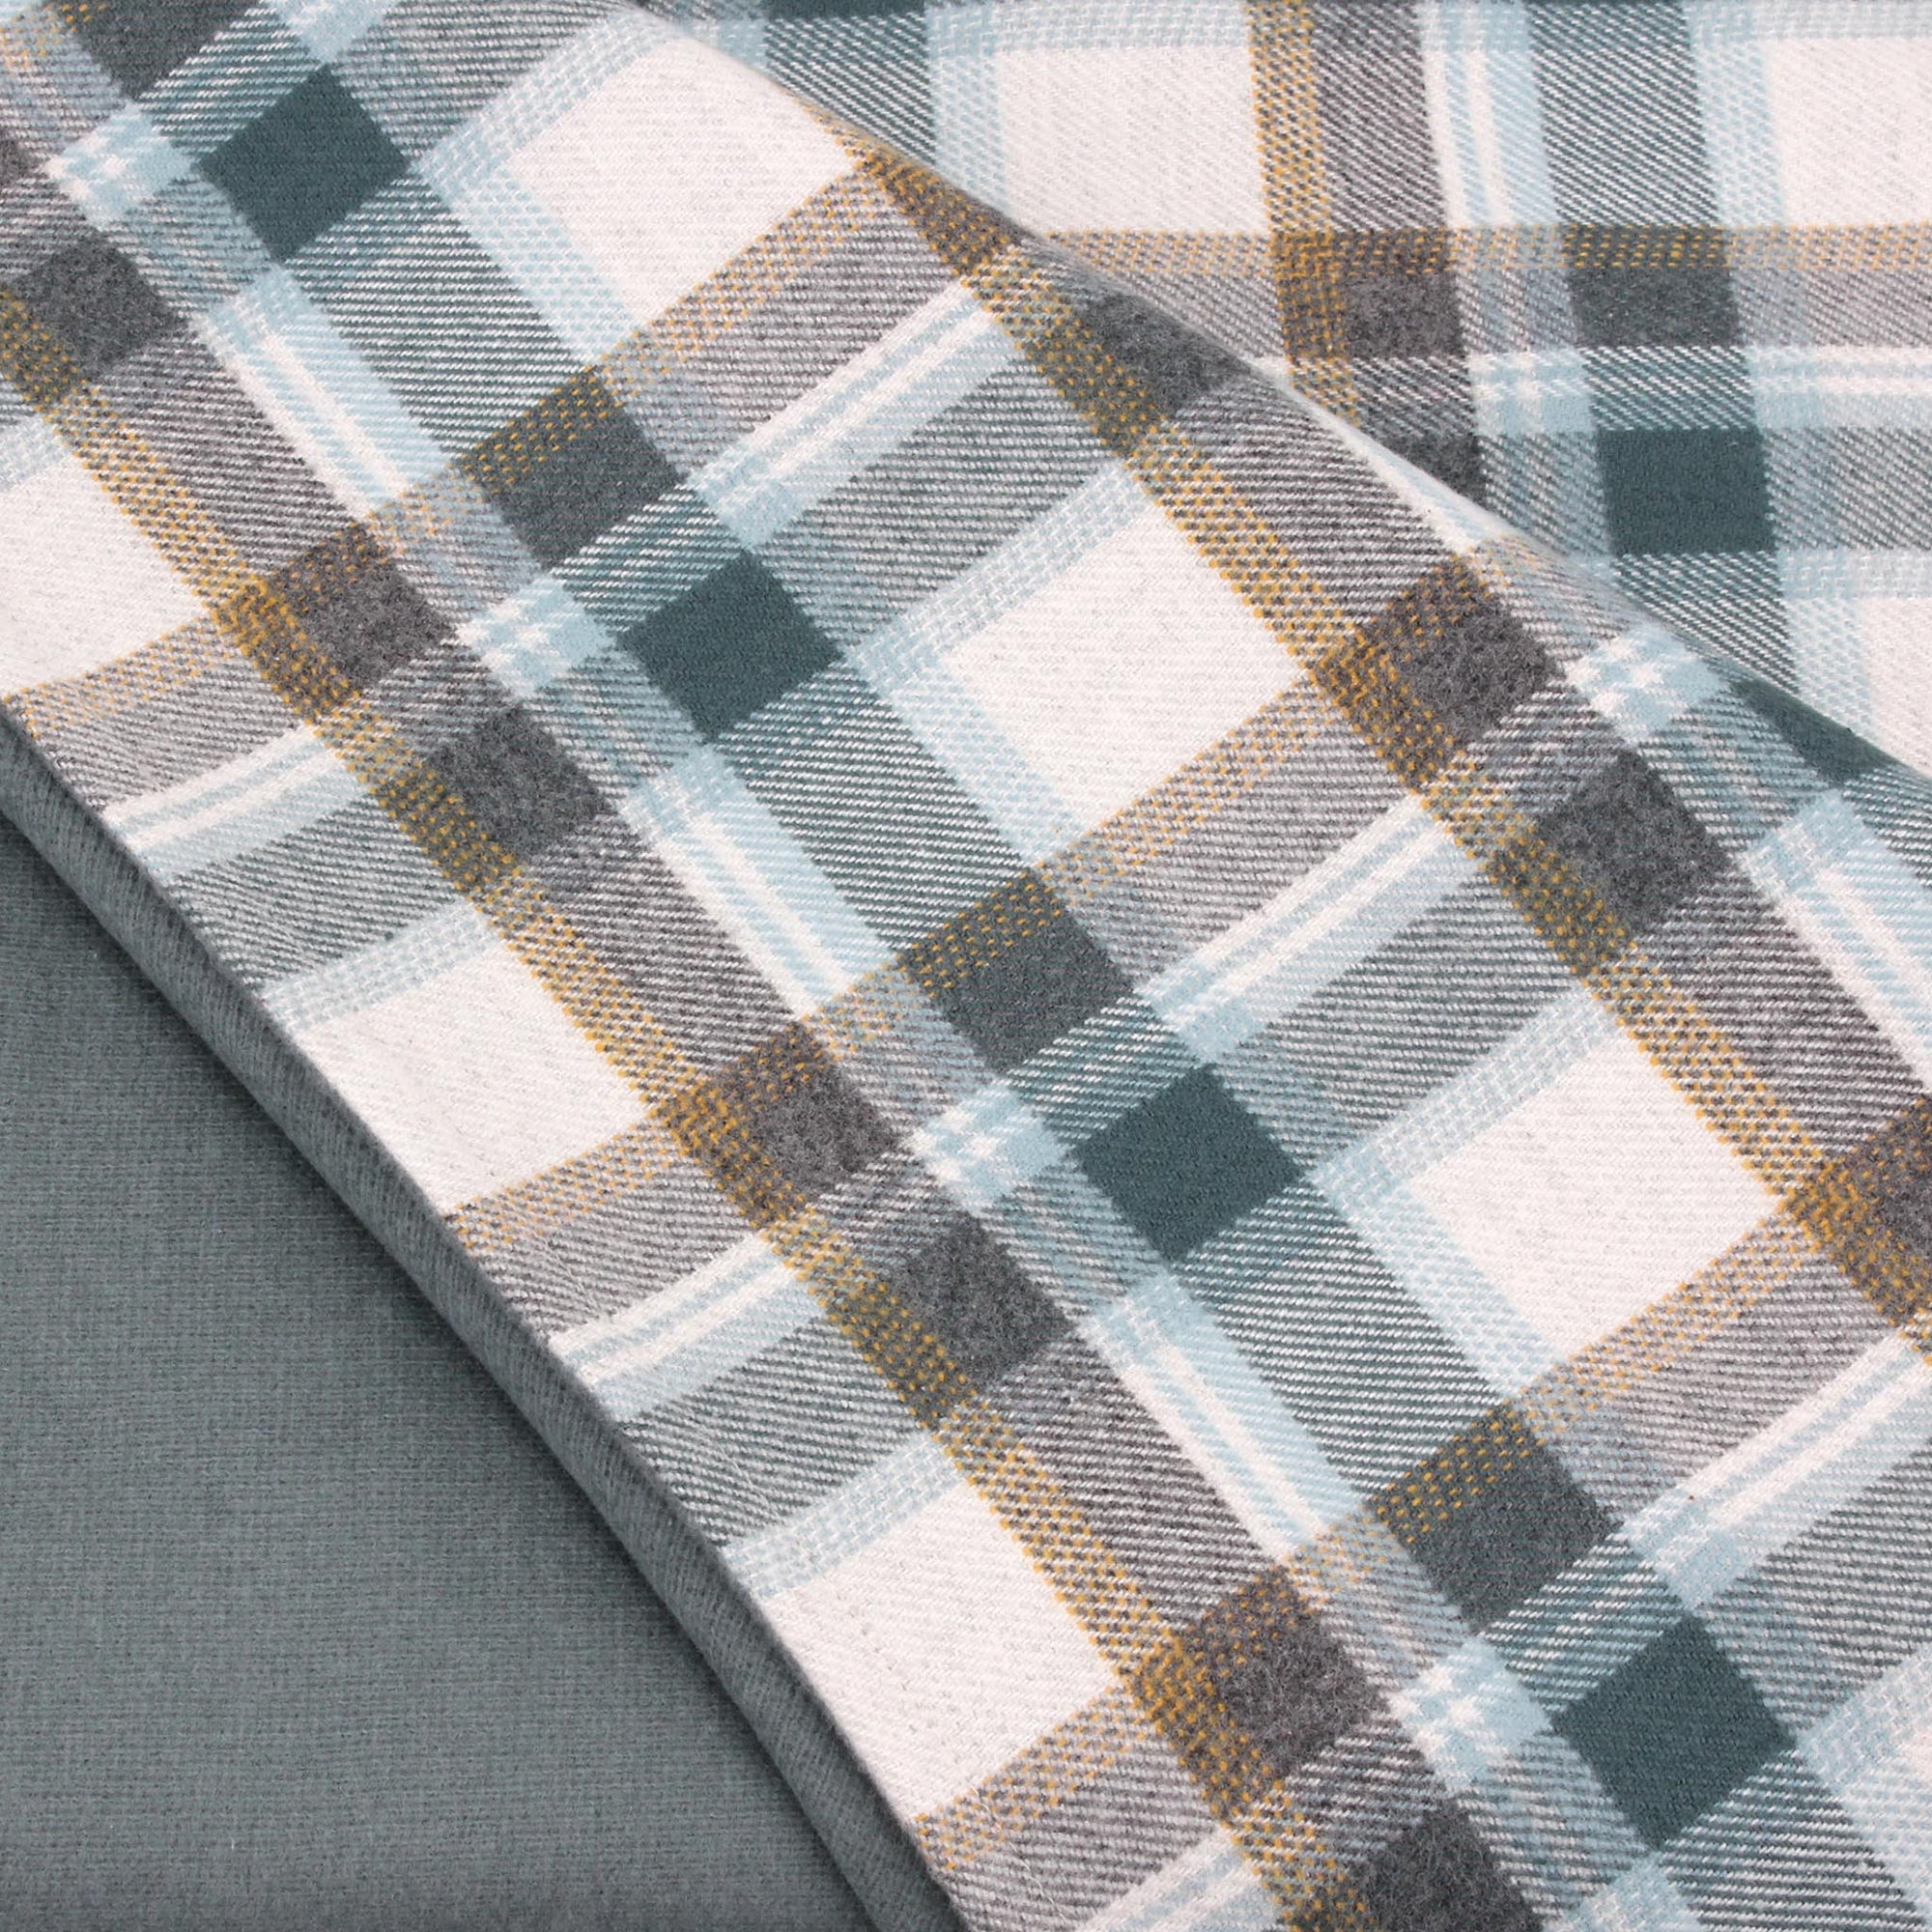 Teal/Beige Checkered Throw Blanket